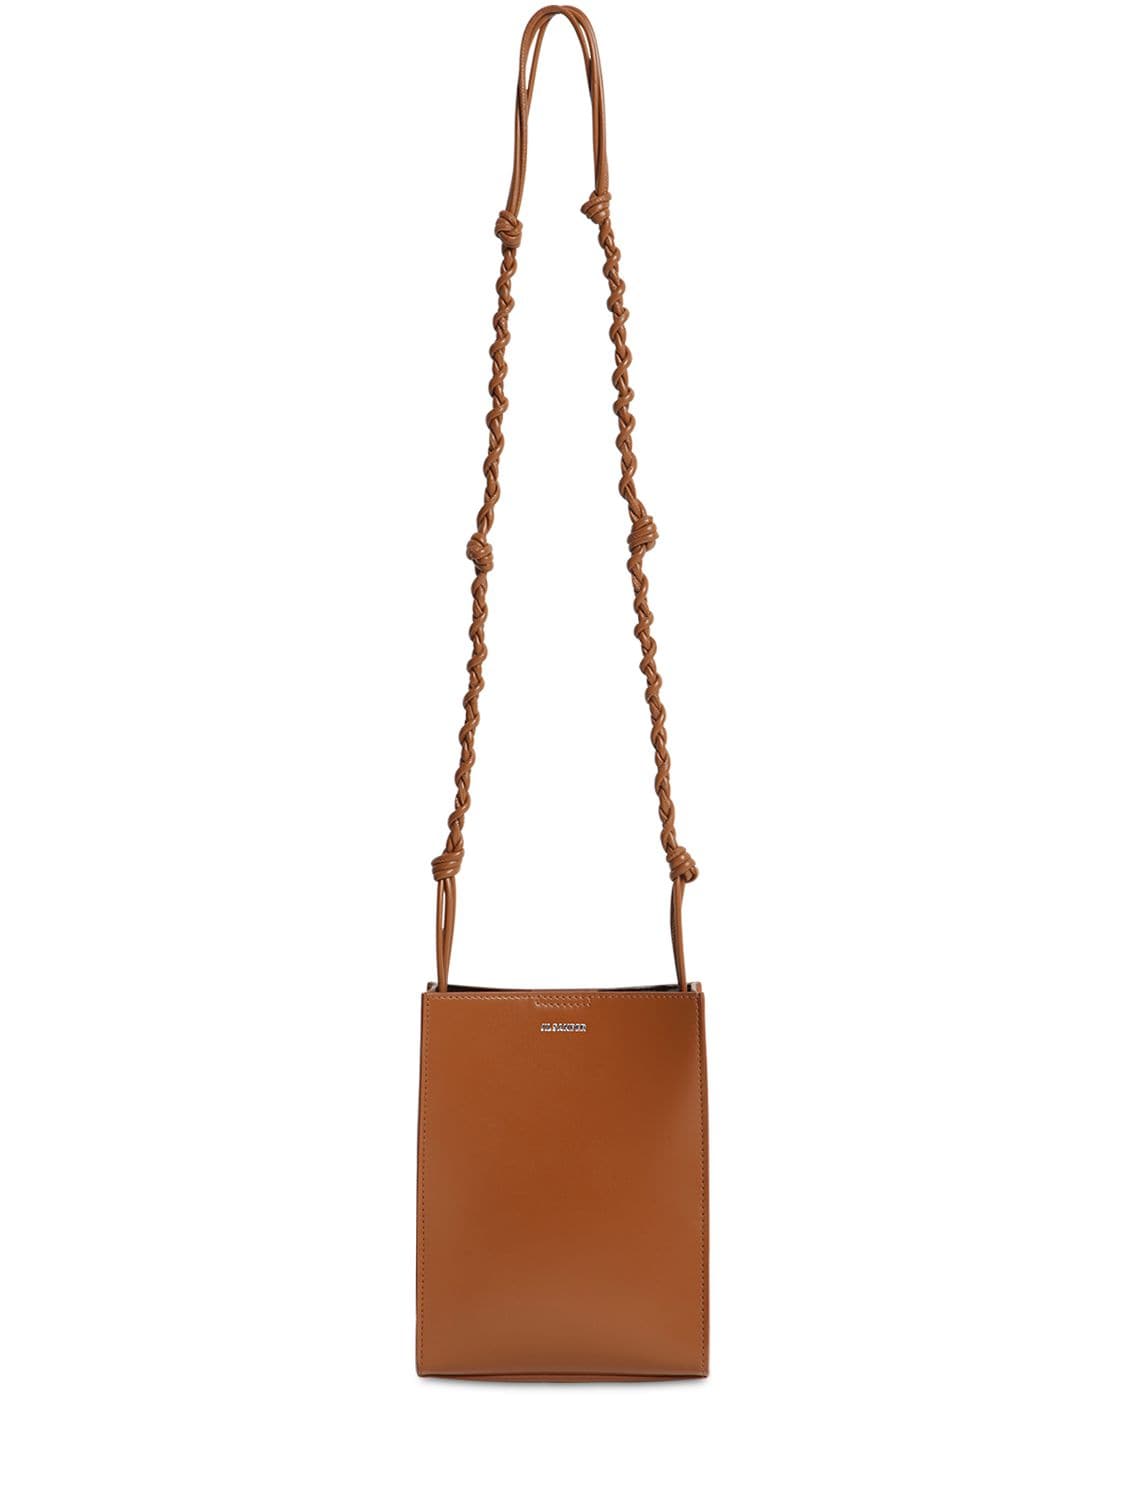 Jil Sander Small Tangle Leather Bag In Caramel